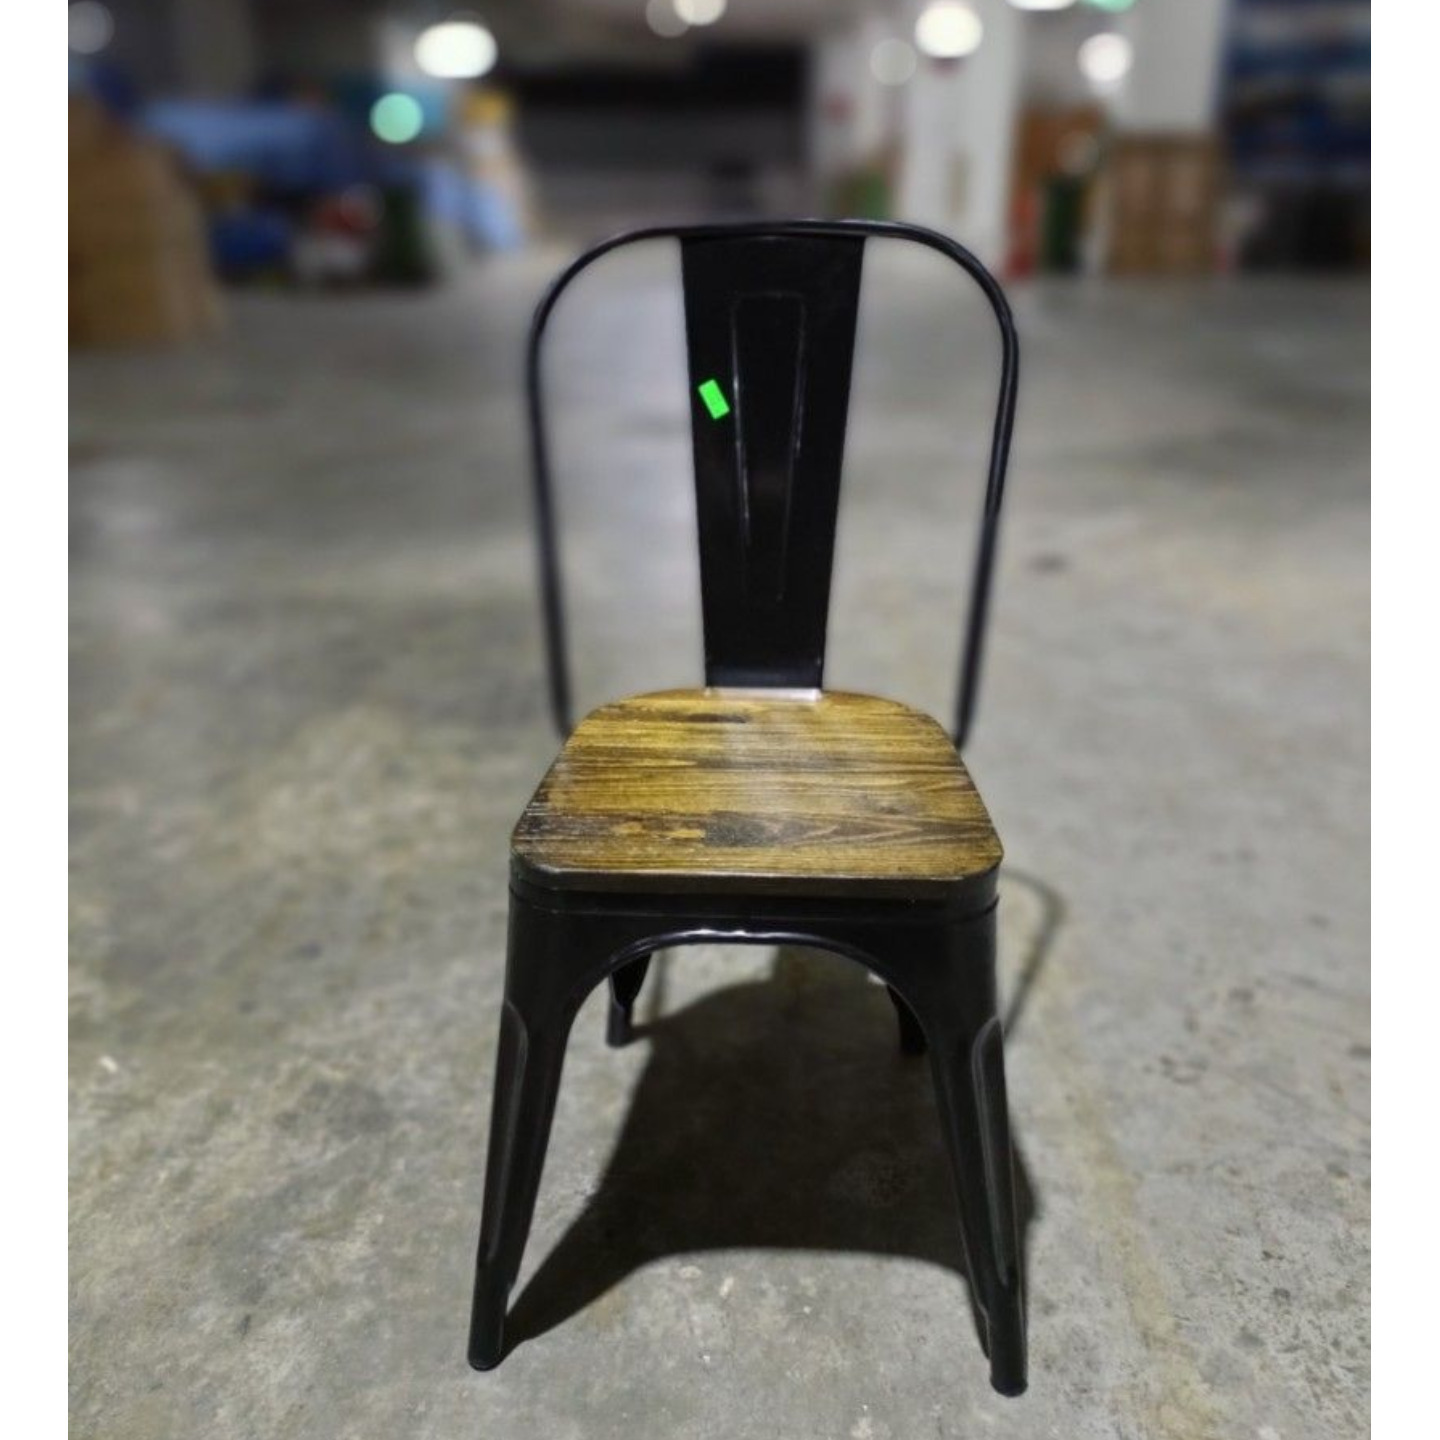 VADO Retro Metal Chair in BLACK with Wooden Top